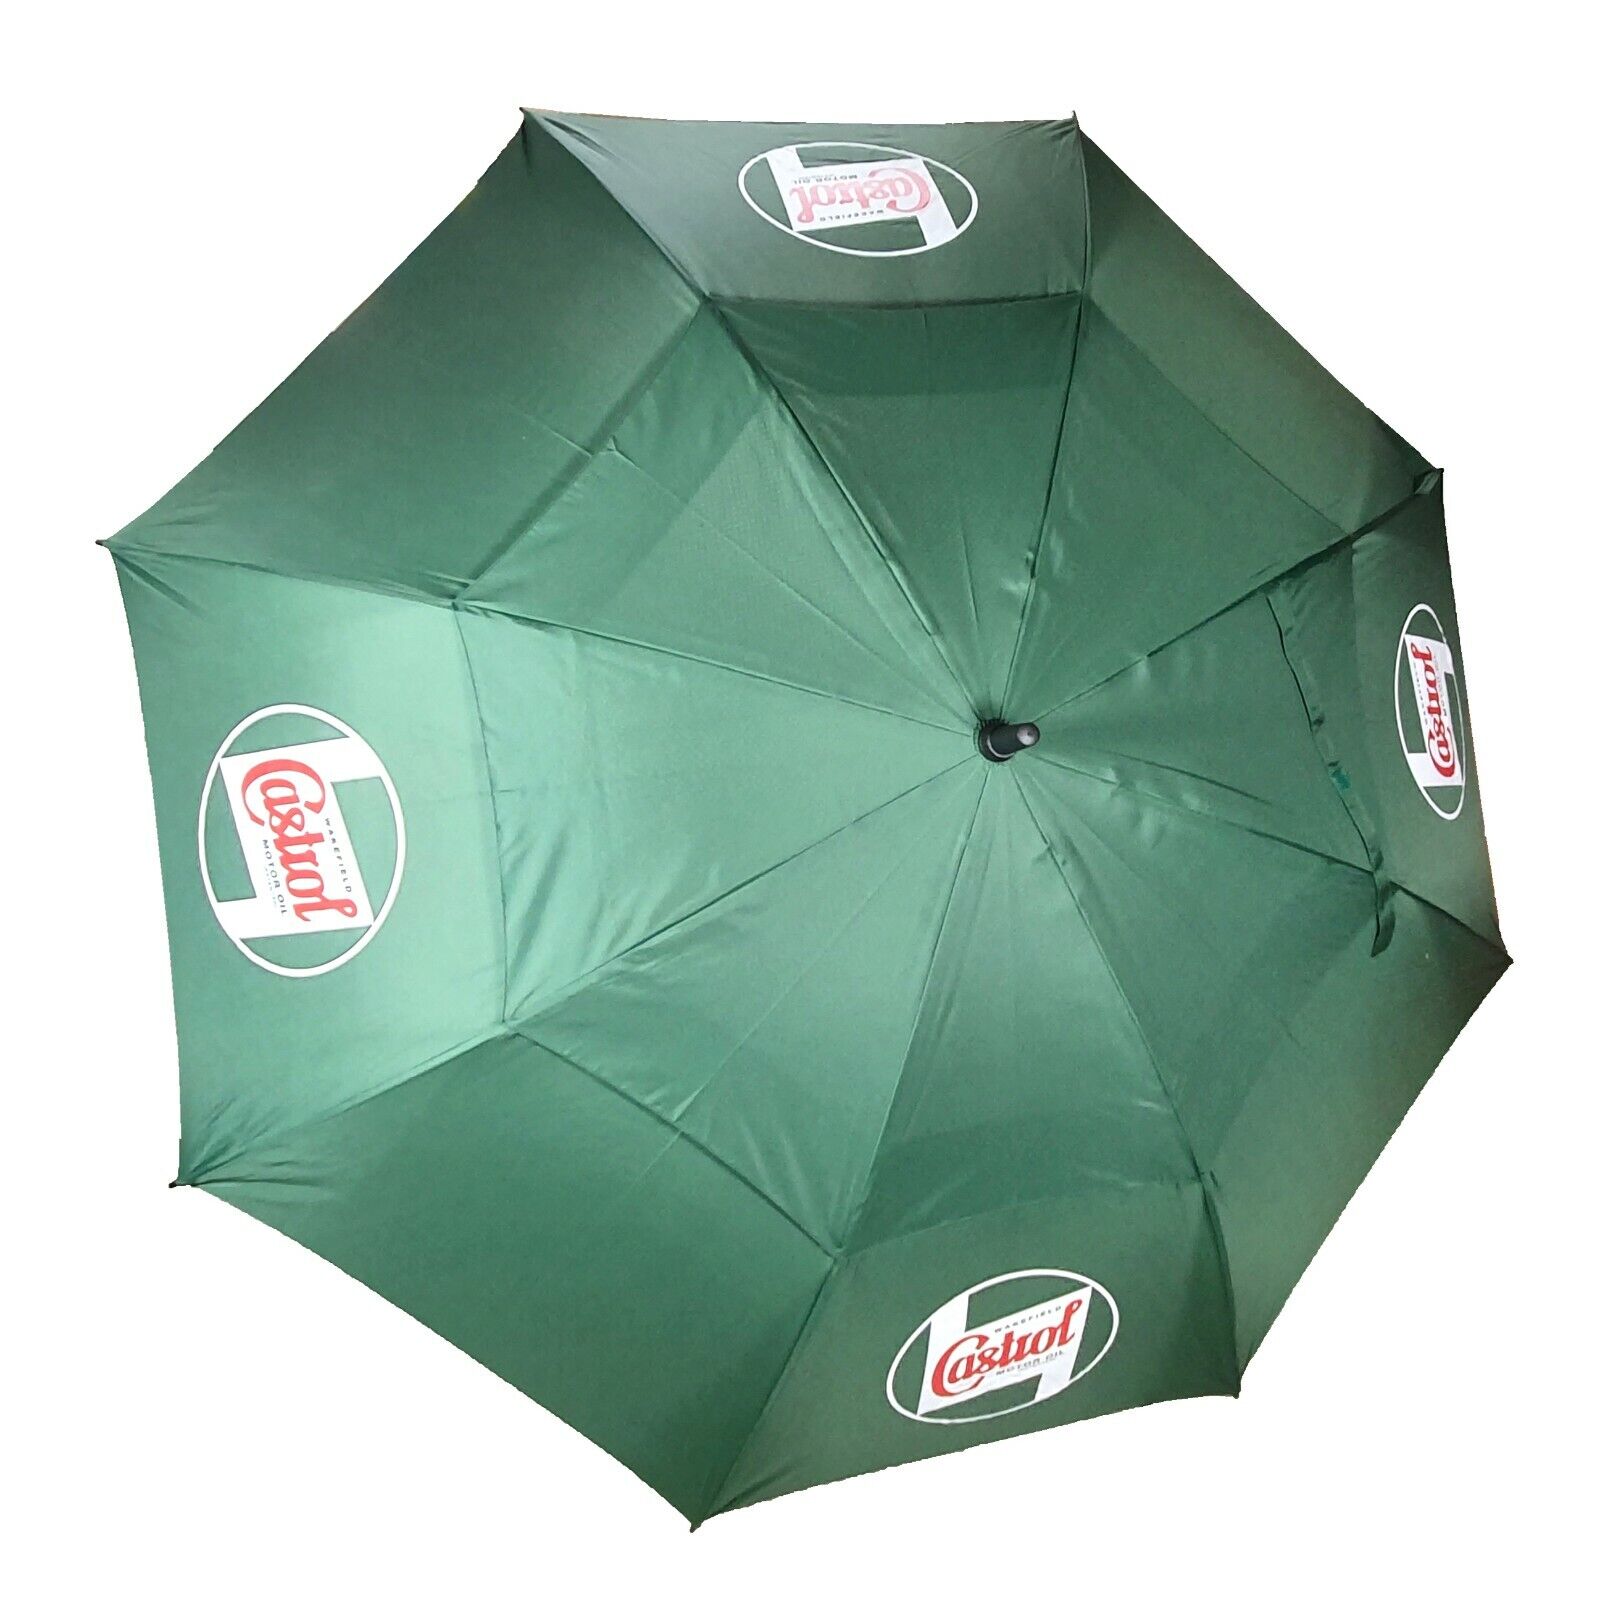 Genuine Castrol Vented Top Golf Umbrella - CASTROL GU